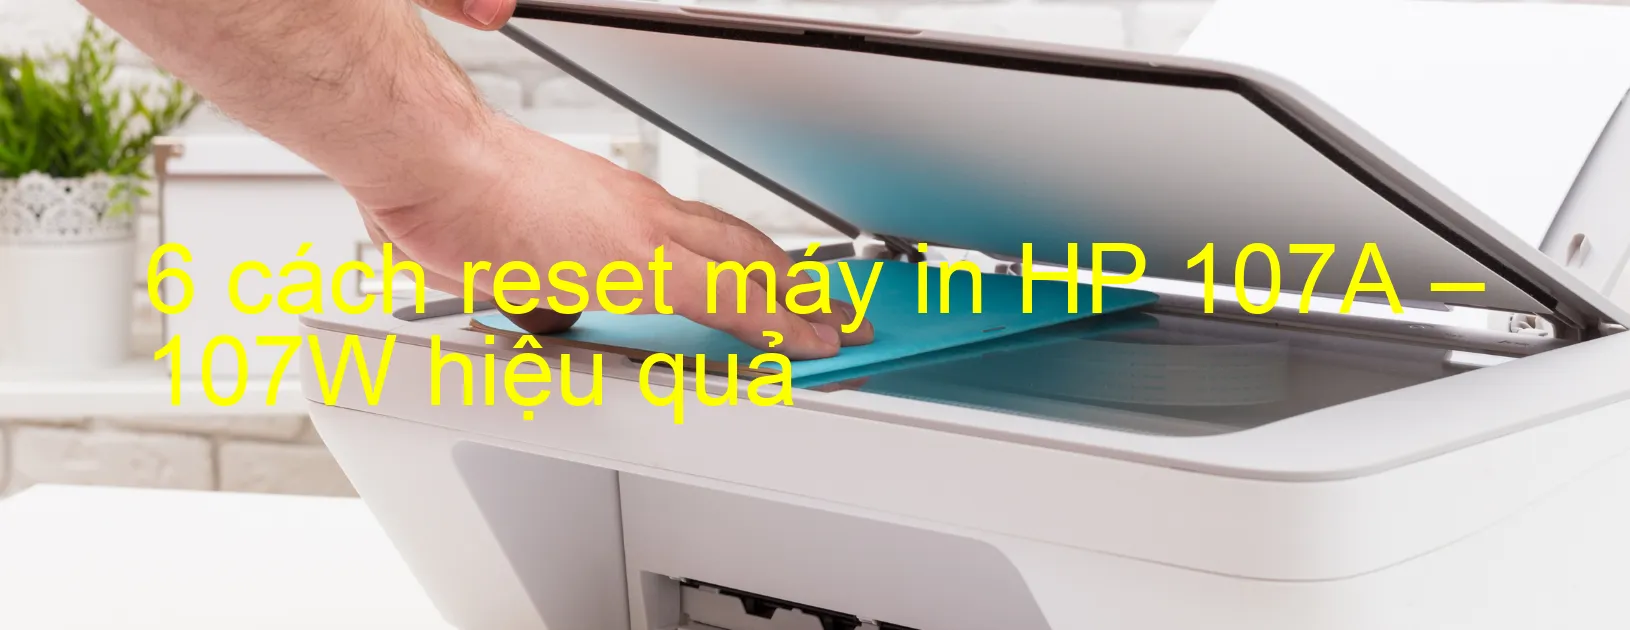 6 cách reset máy in HP 107A – 107W hiệu quả